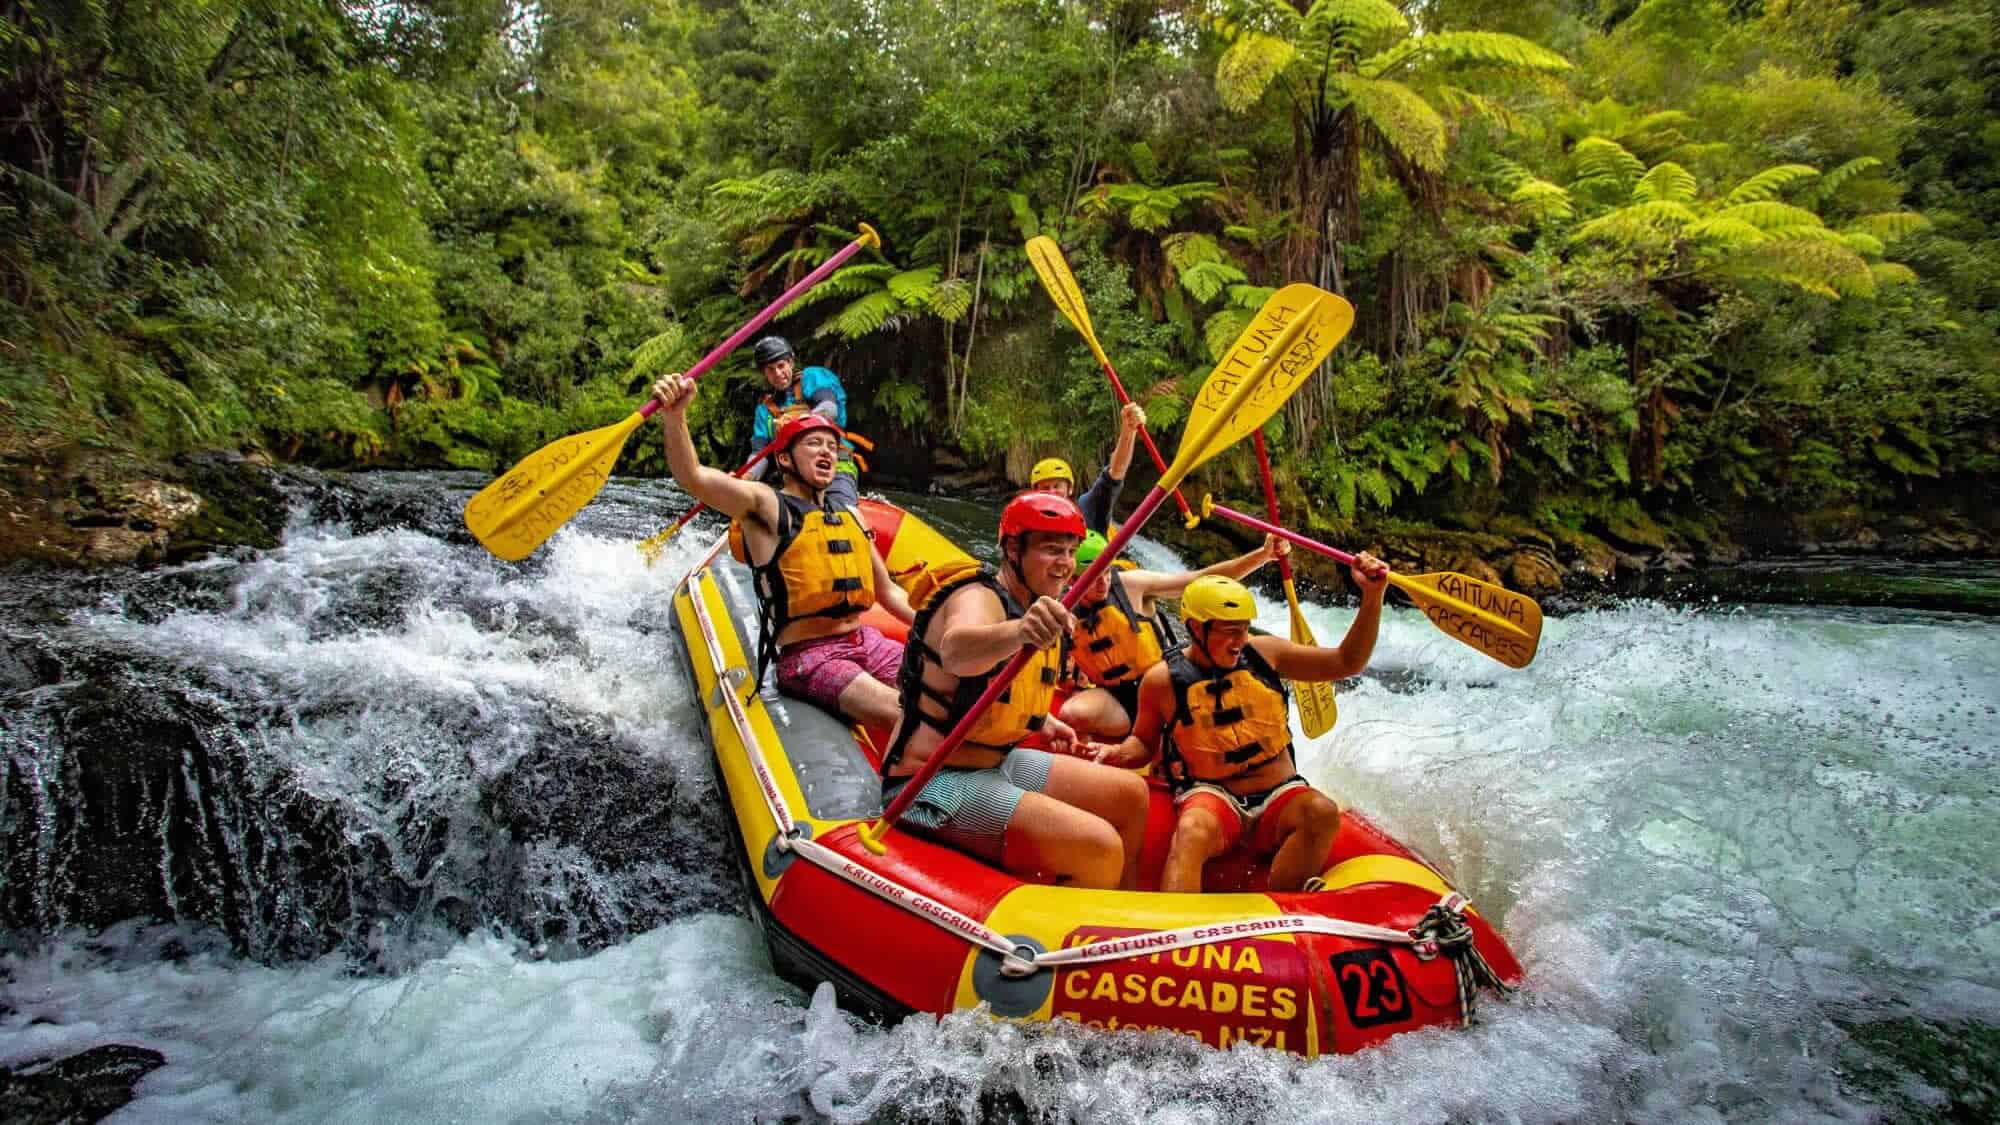 2 Kaituna River Fun 1 - Kaituna Cascades Rotorua New Zealand